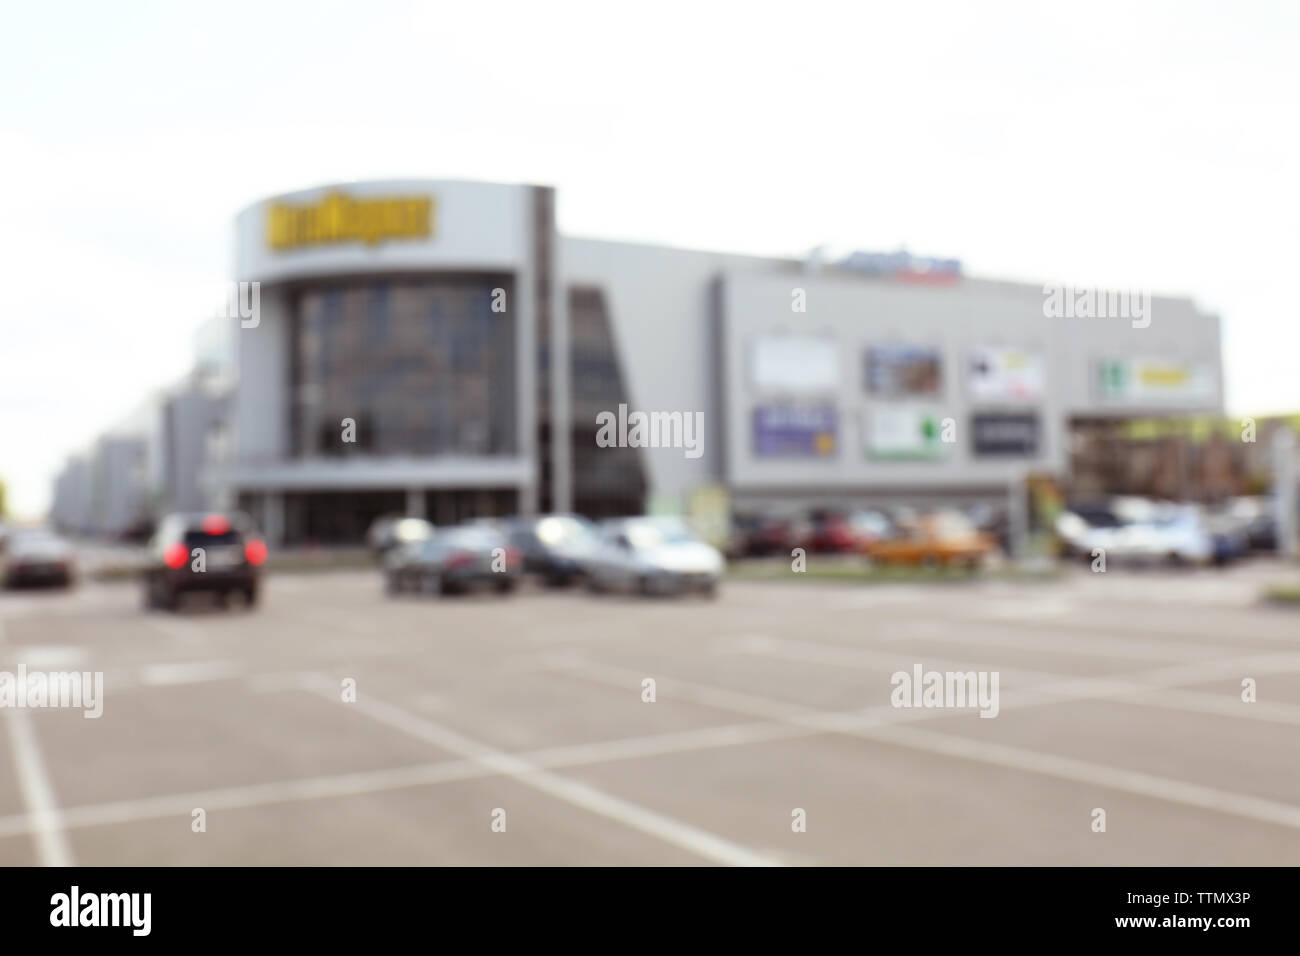 A hypermarket parking lot 100% solar - E.Leclerc, Carcassone